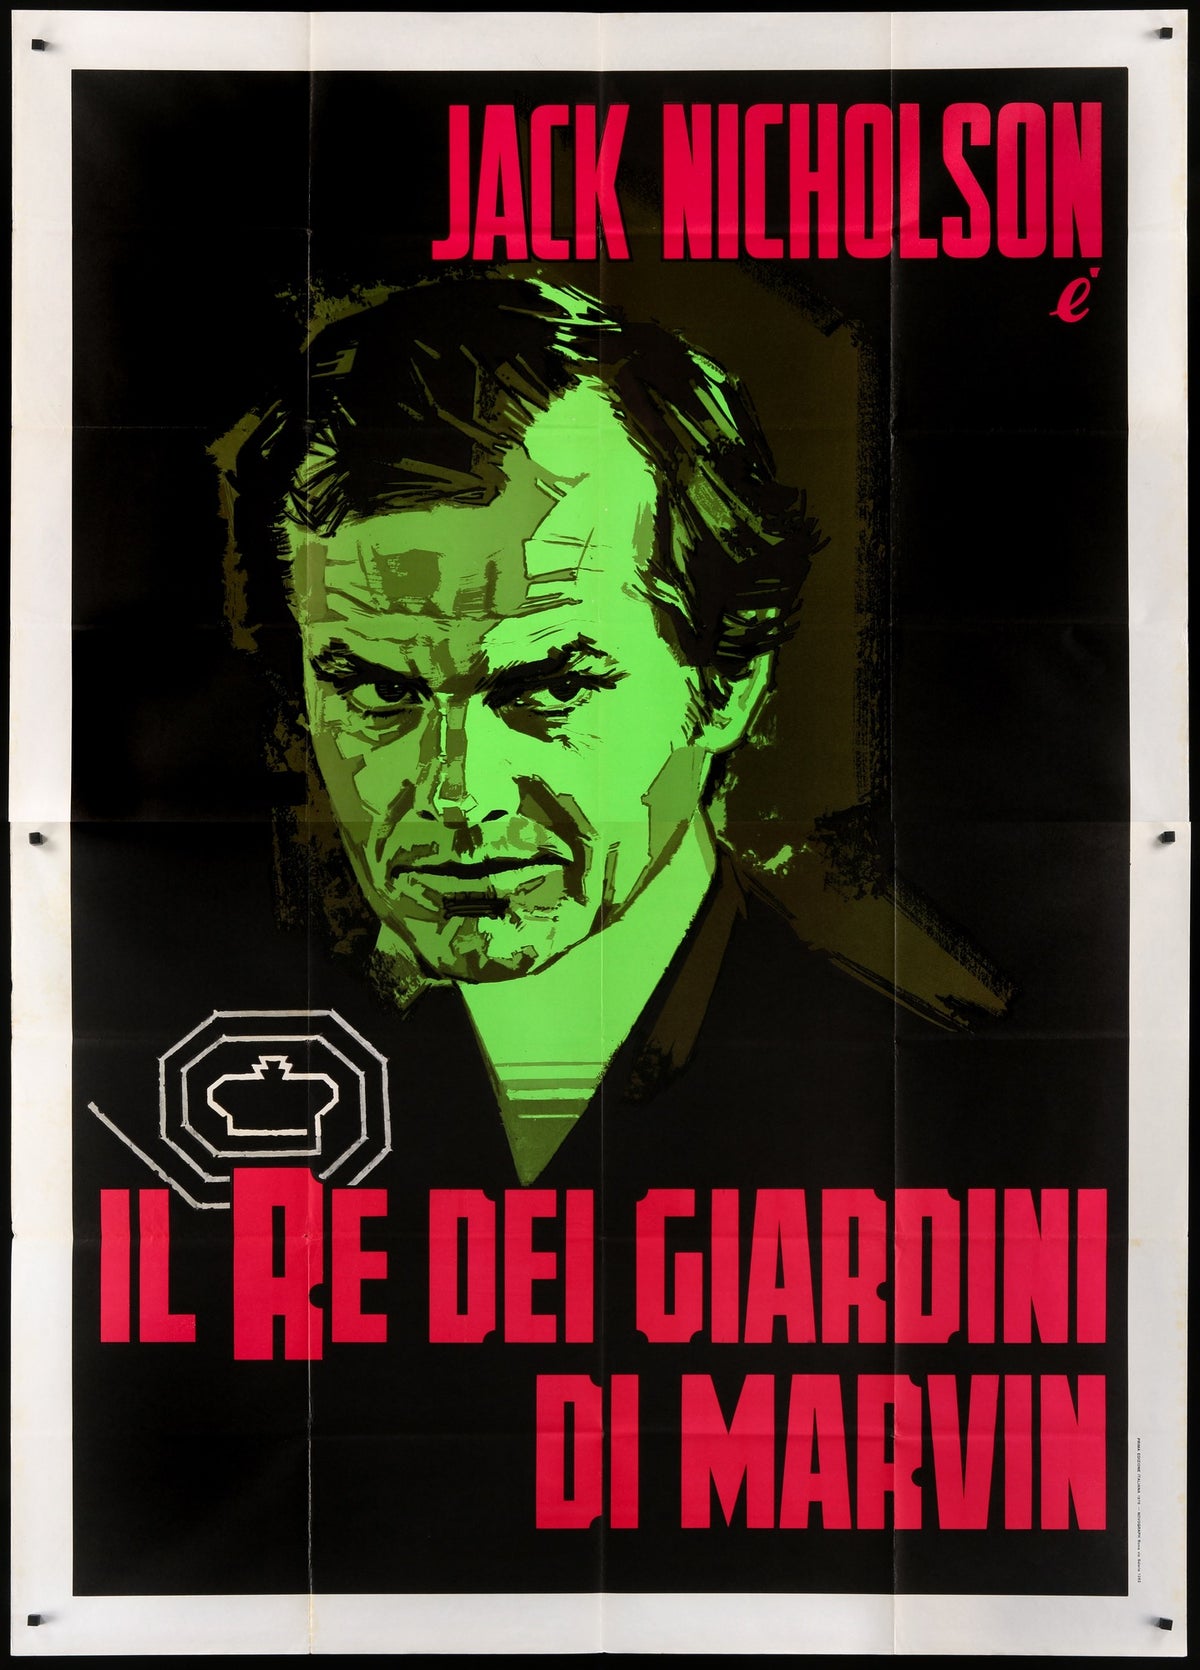 King of Marvin Gardens (1972) original movie poster for sale at Original Film Art